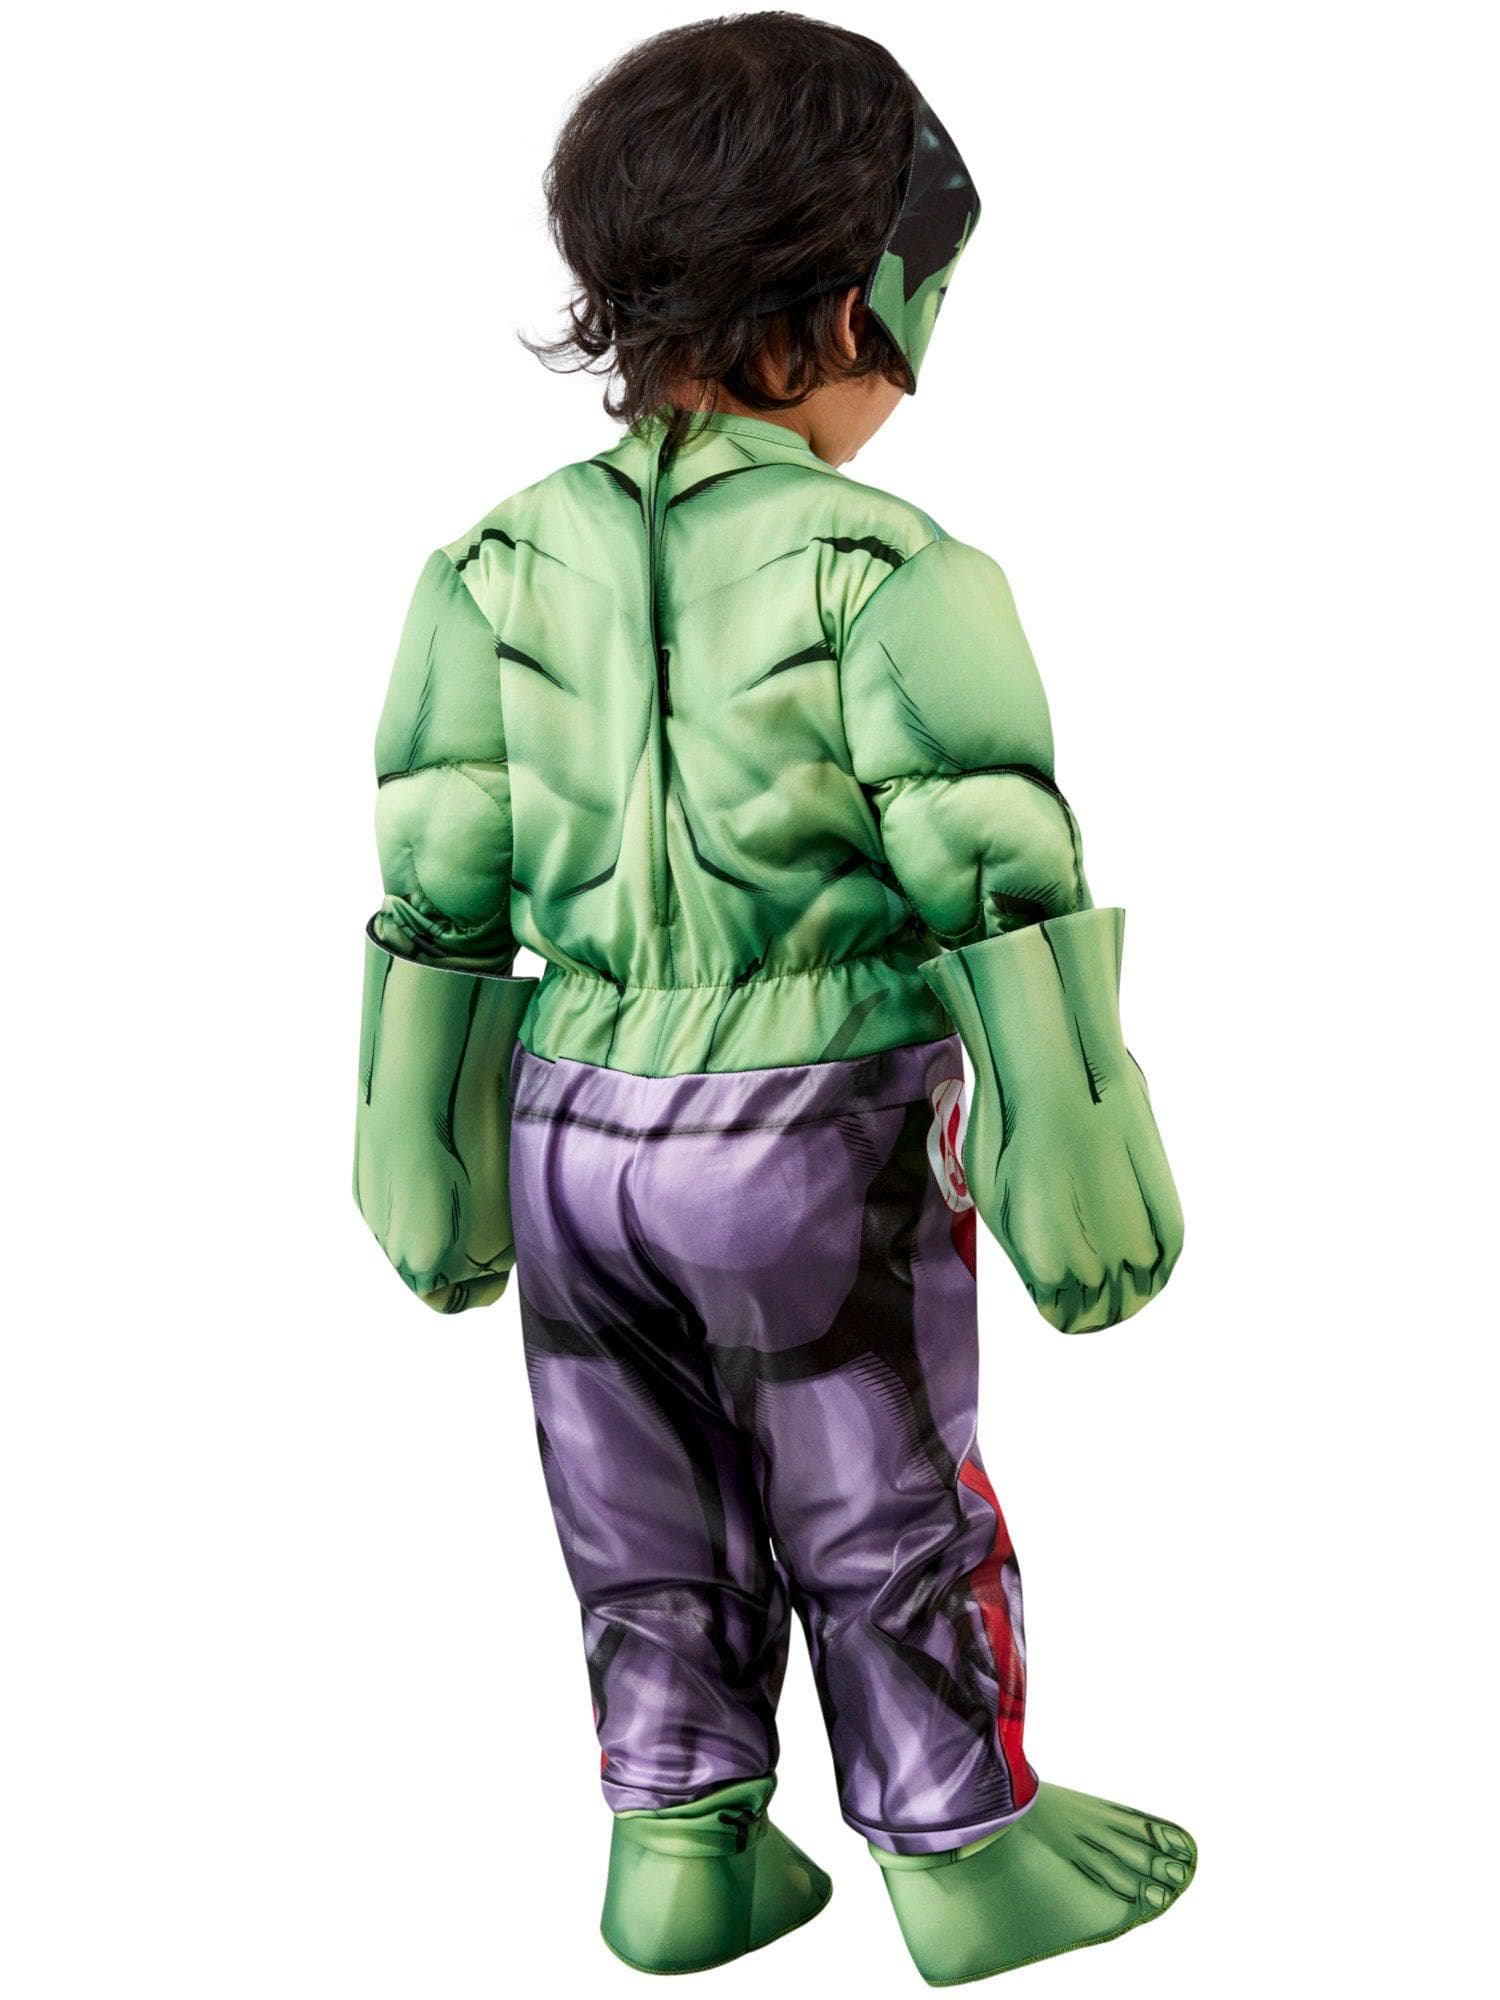 Hulk Toddler Costume - costumes.com